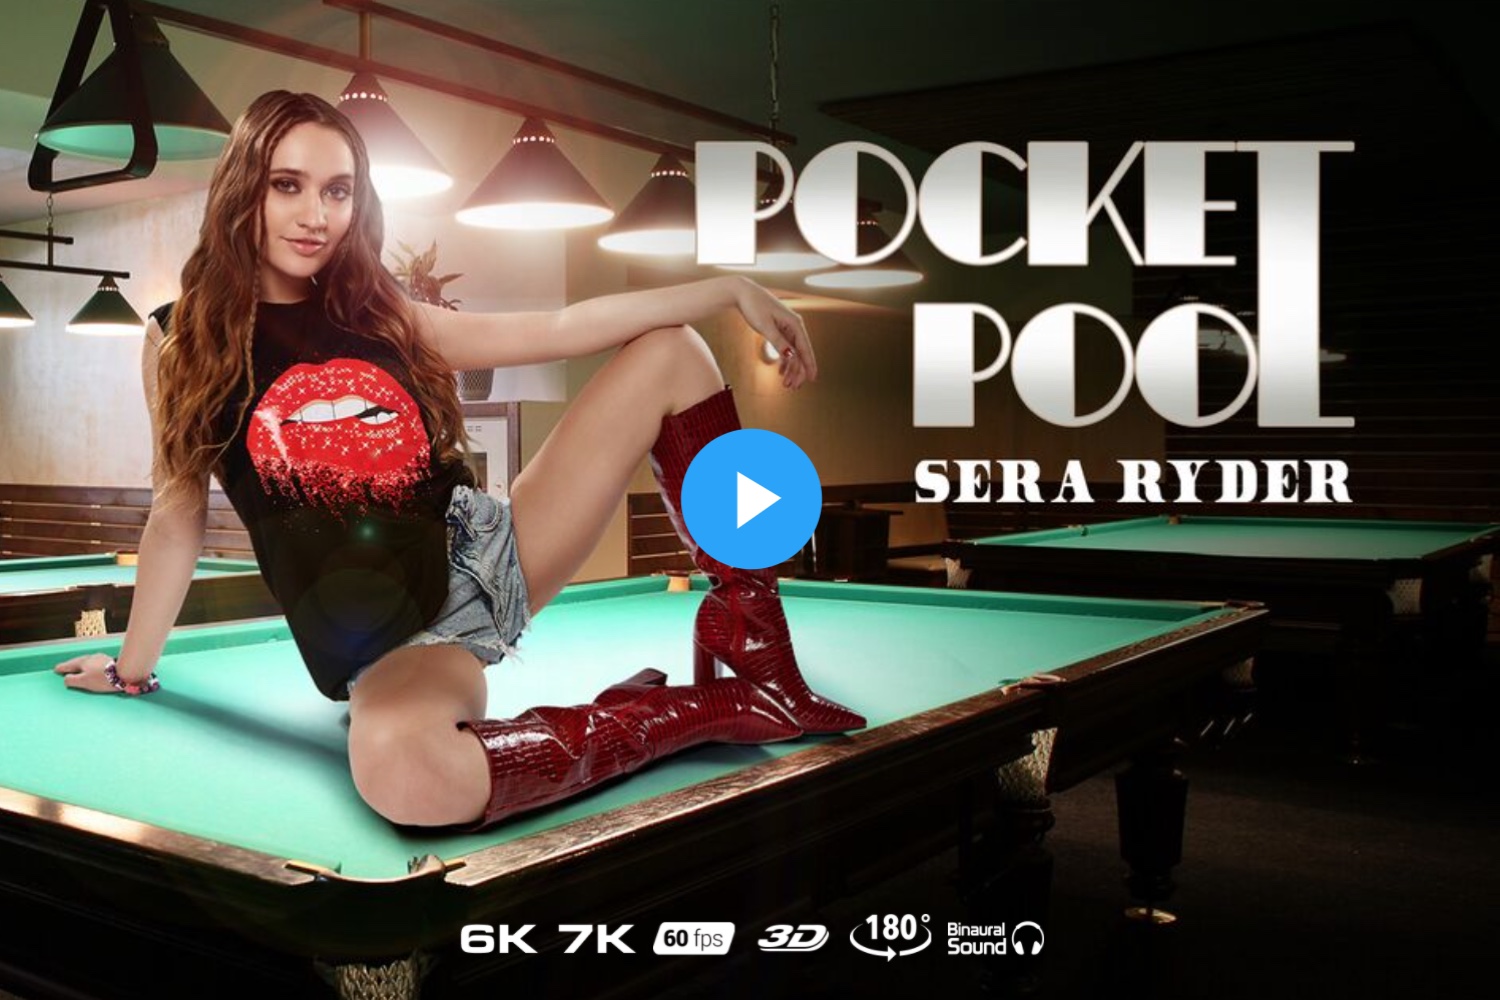 Pocket Pool - Sera Ryder VR Porn - Sera Ryder Virtual Reality Porn